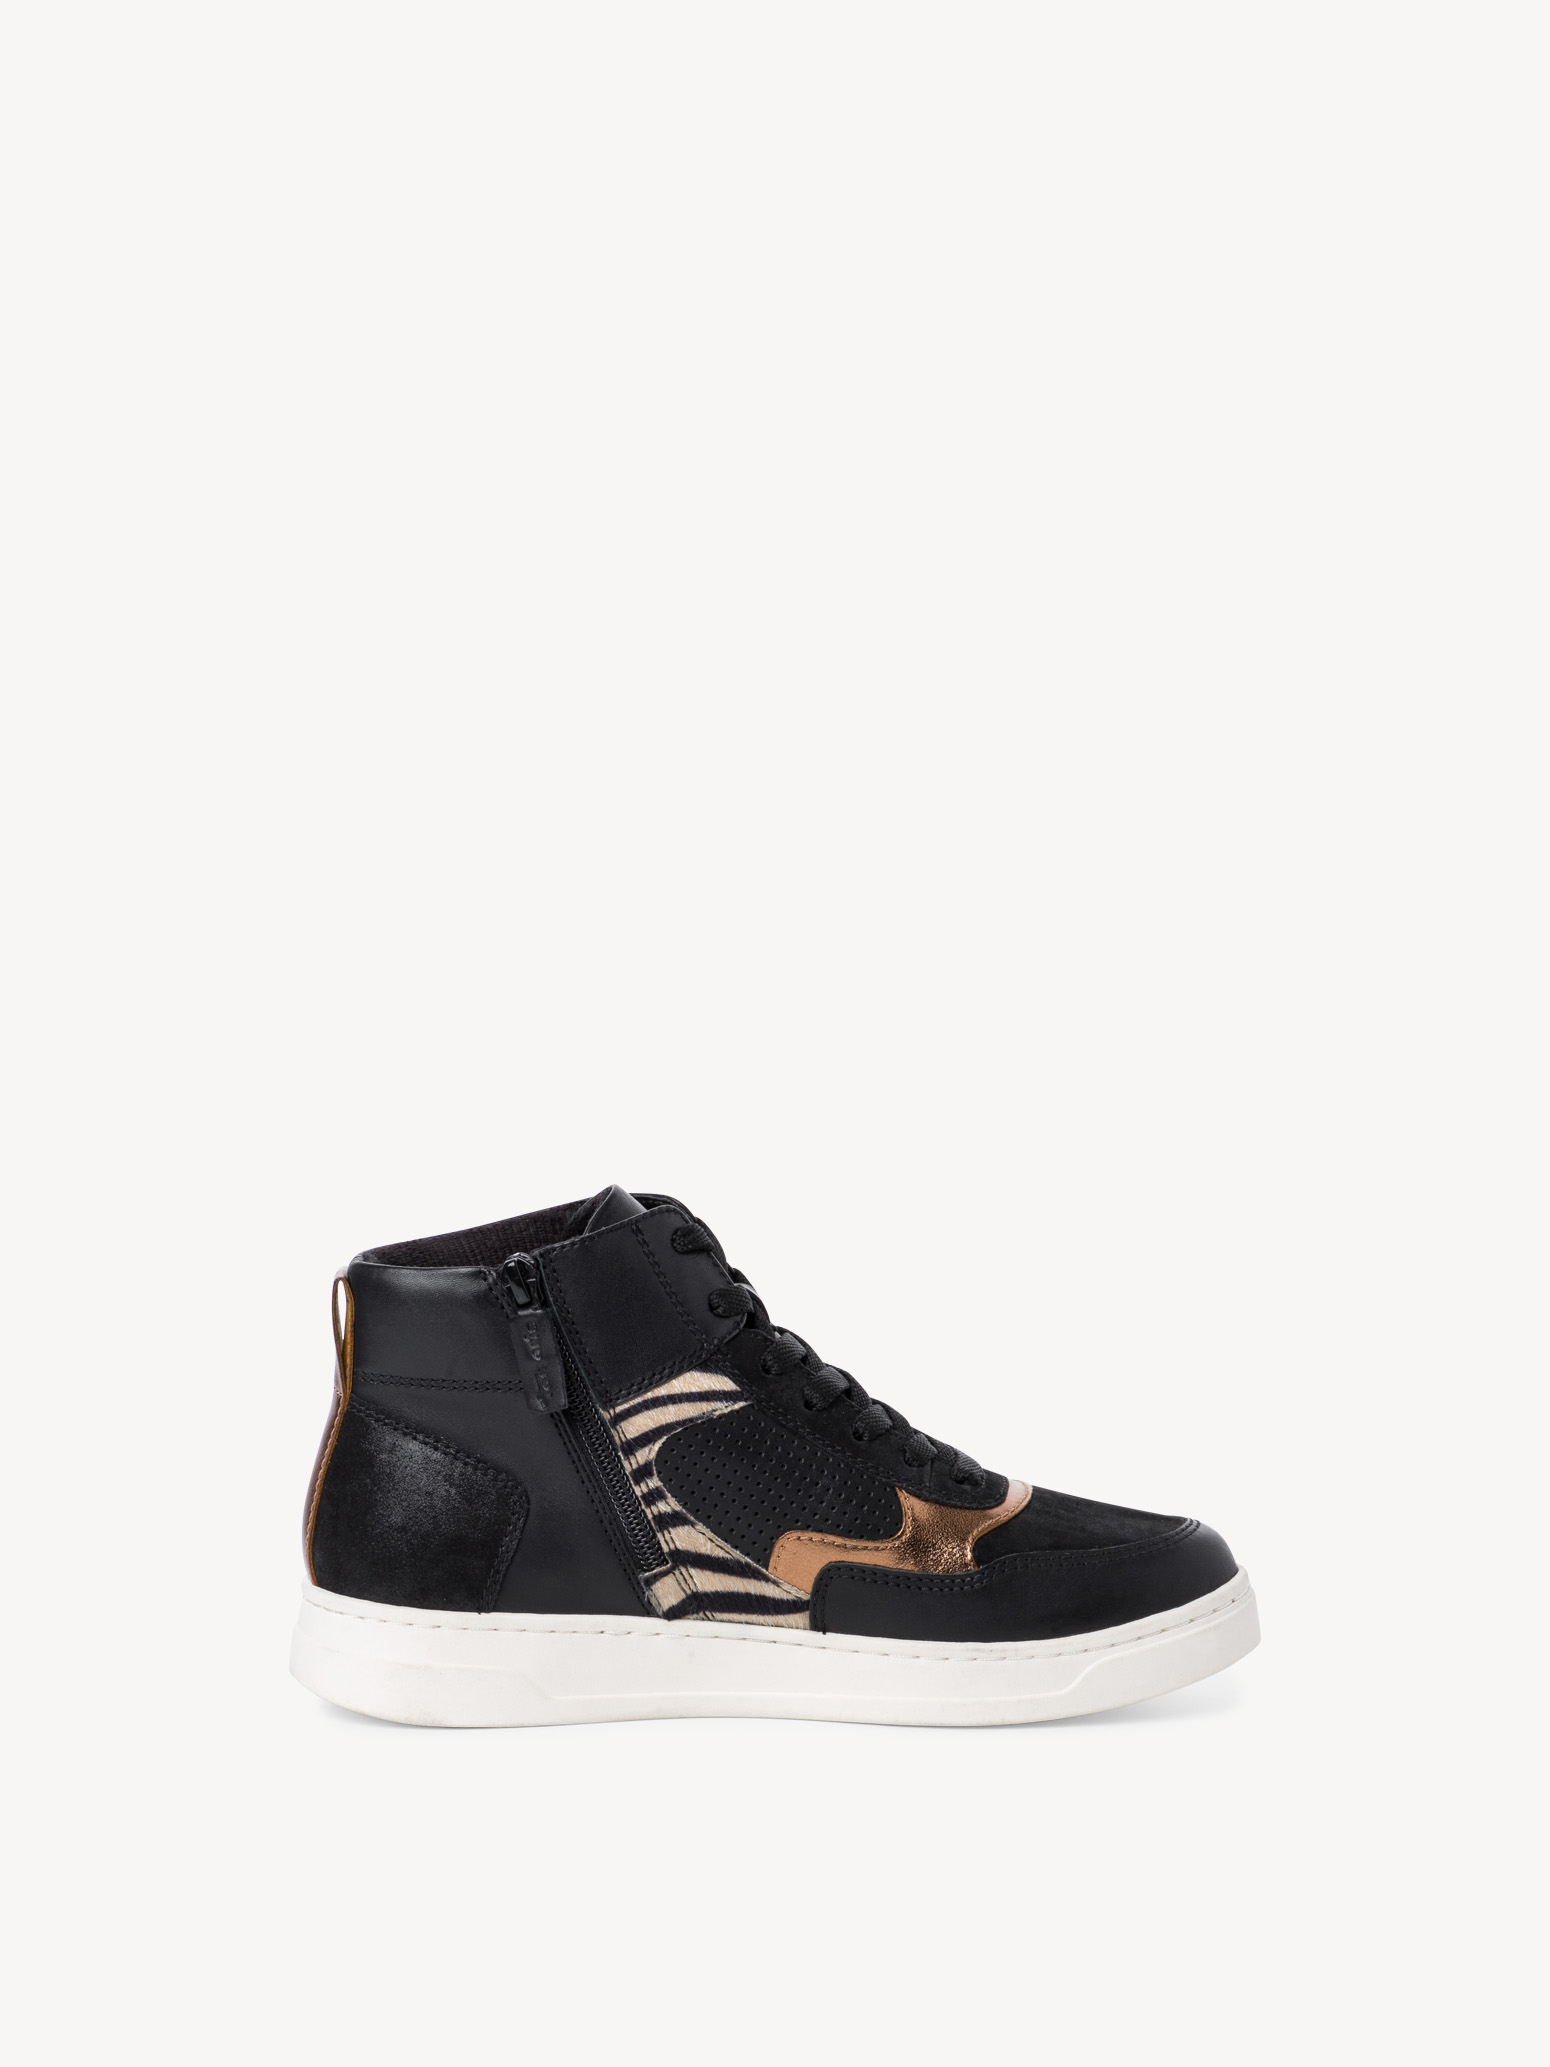 Sneaker - black, BLK/COPP.ZEBRA, hi-res